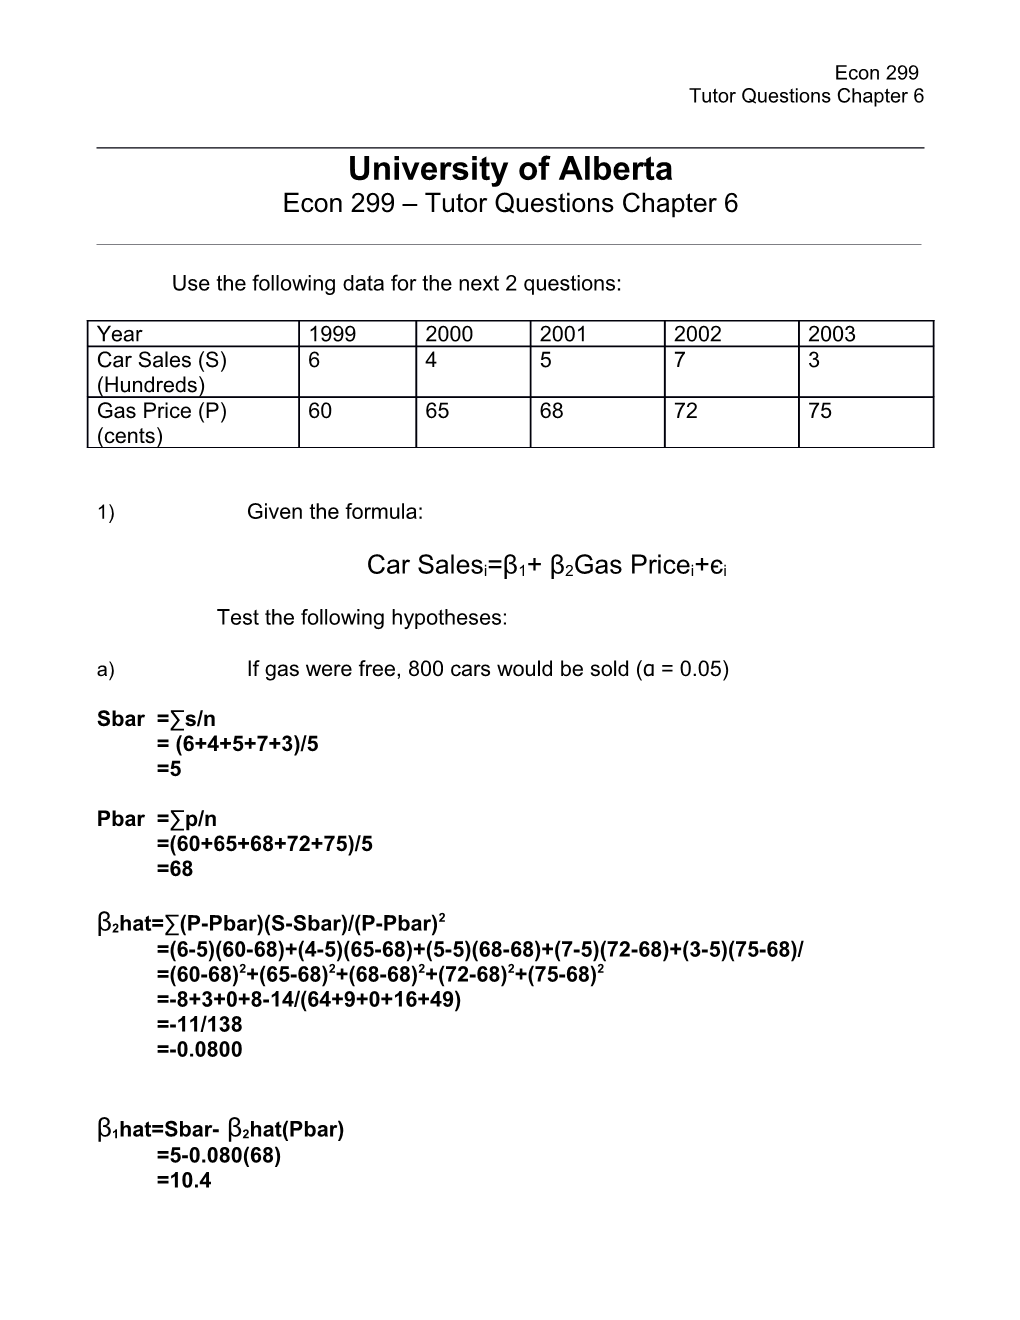 University of Alberta s2